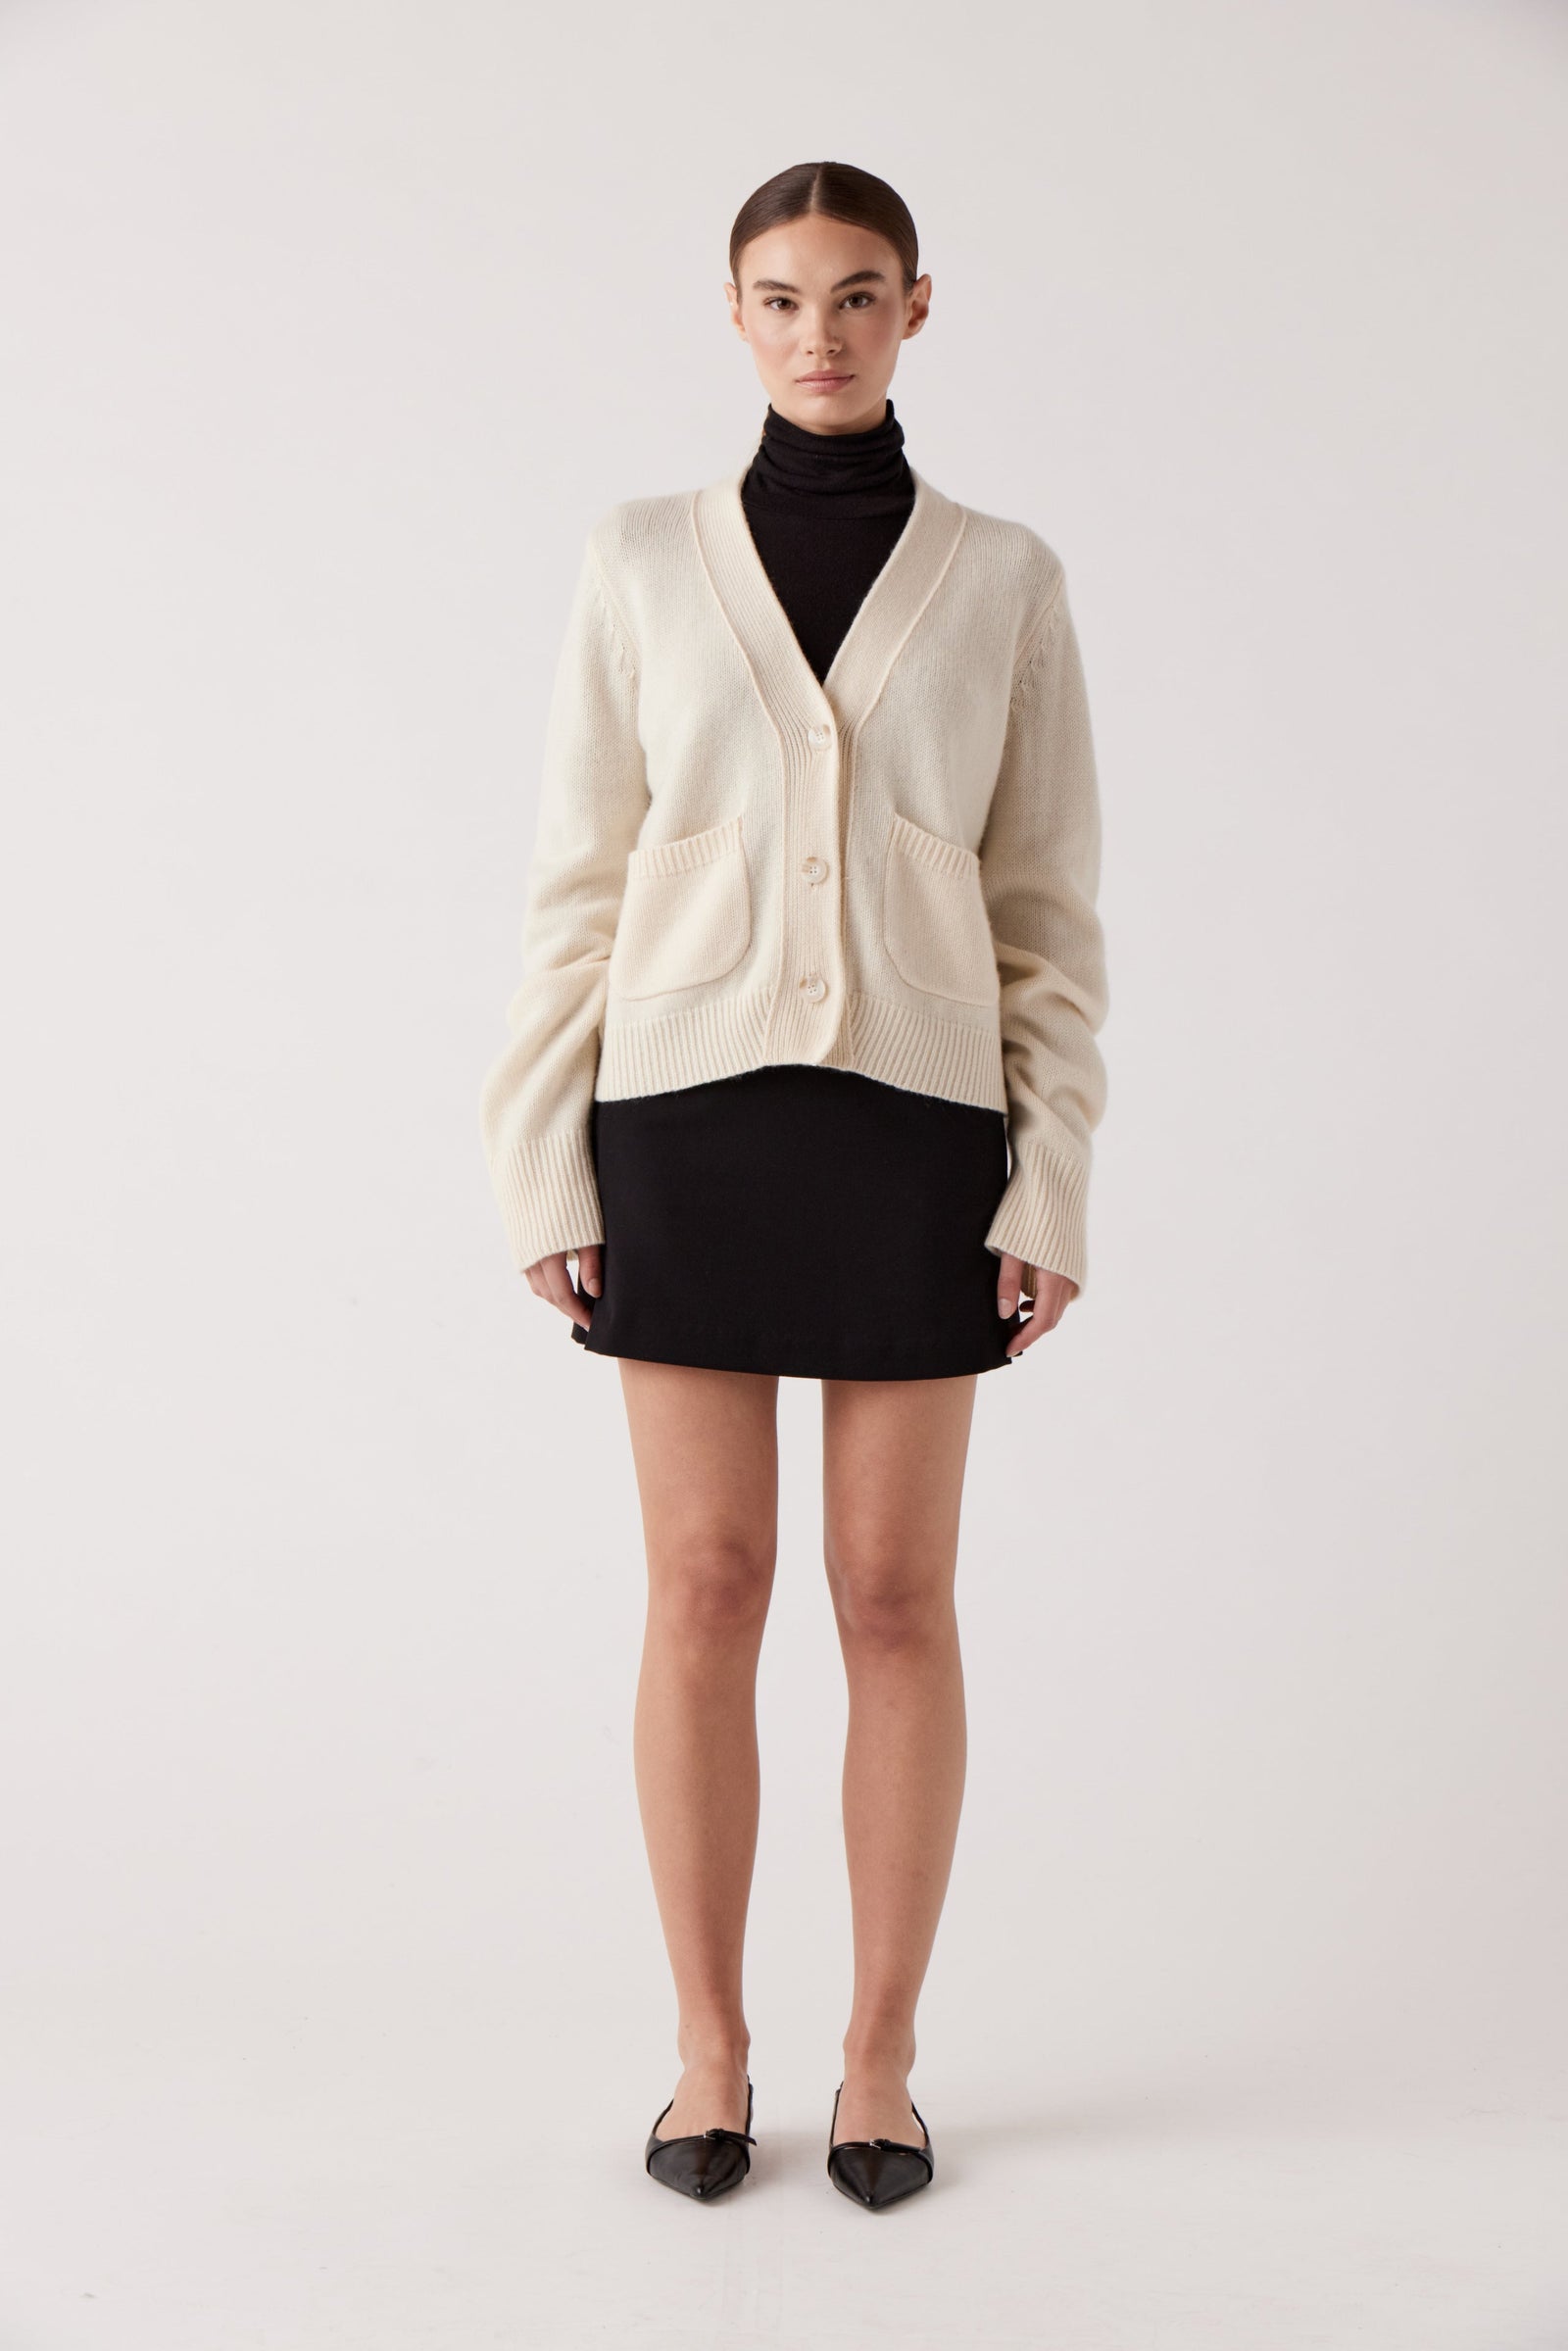 Blanca Mixed Knit Cardigan - Adorn Boutique